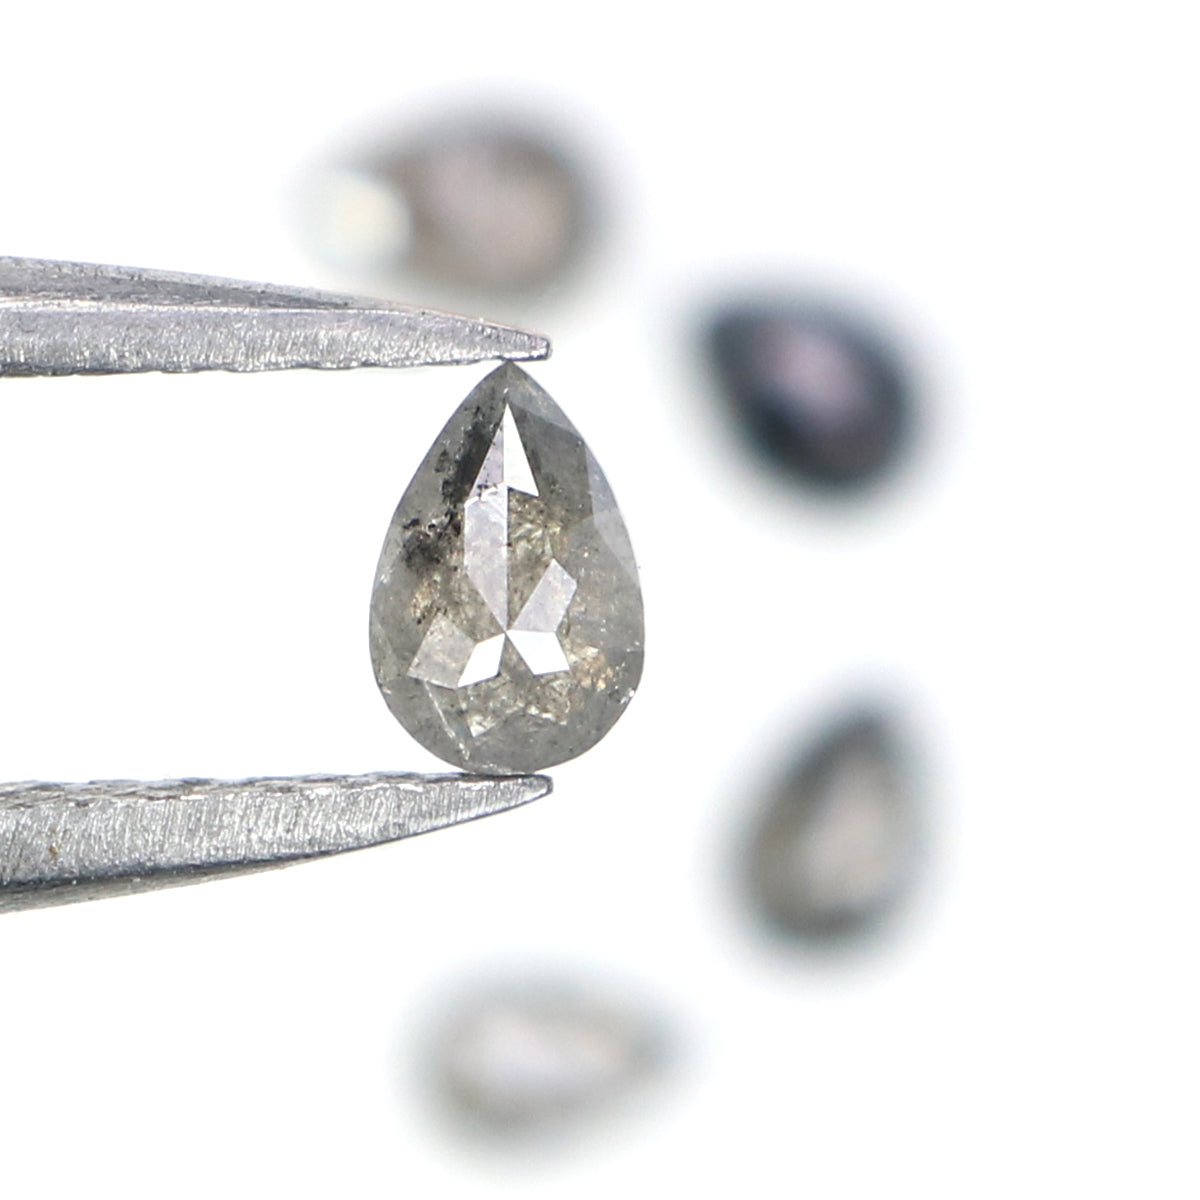 Natural Loose Pear Diamond, Salt And Pepper Pear Diamond, Natural Loose Diamond, Pear Rose Cut Diamond, 0.56 CT Pear Cut Diamond KR2665